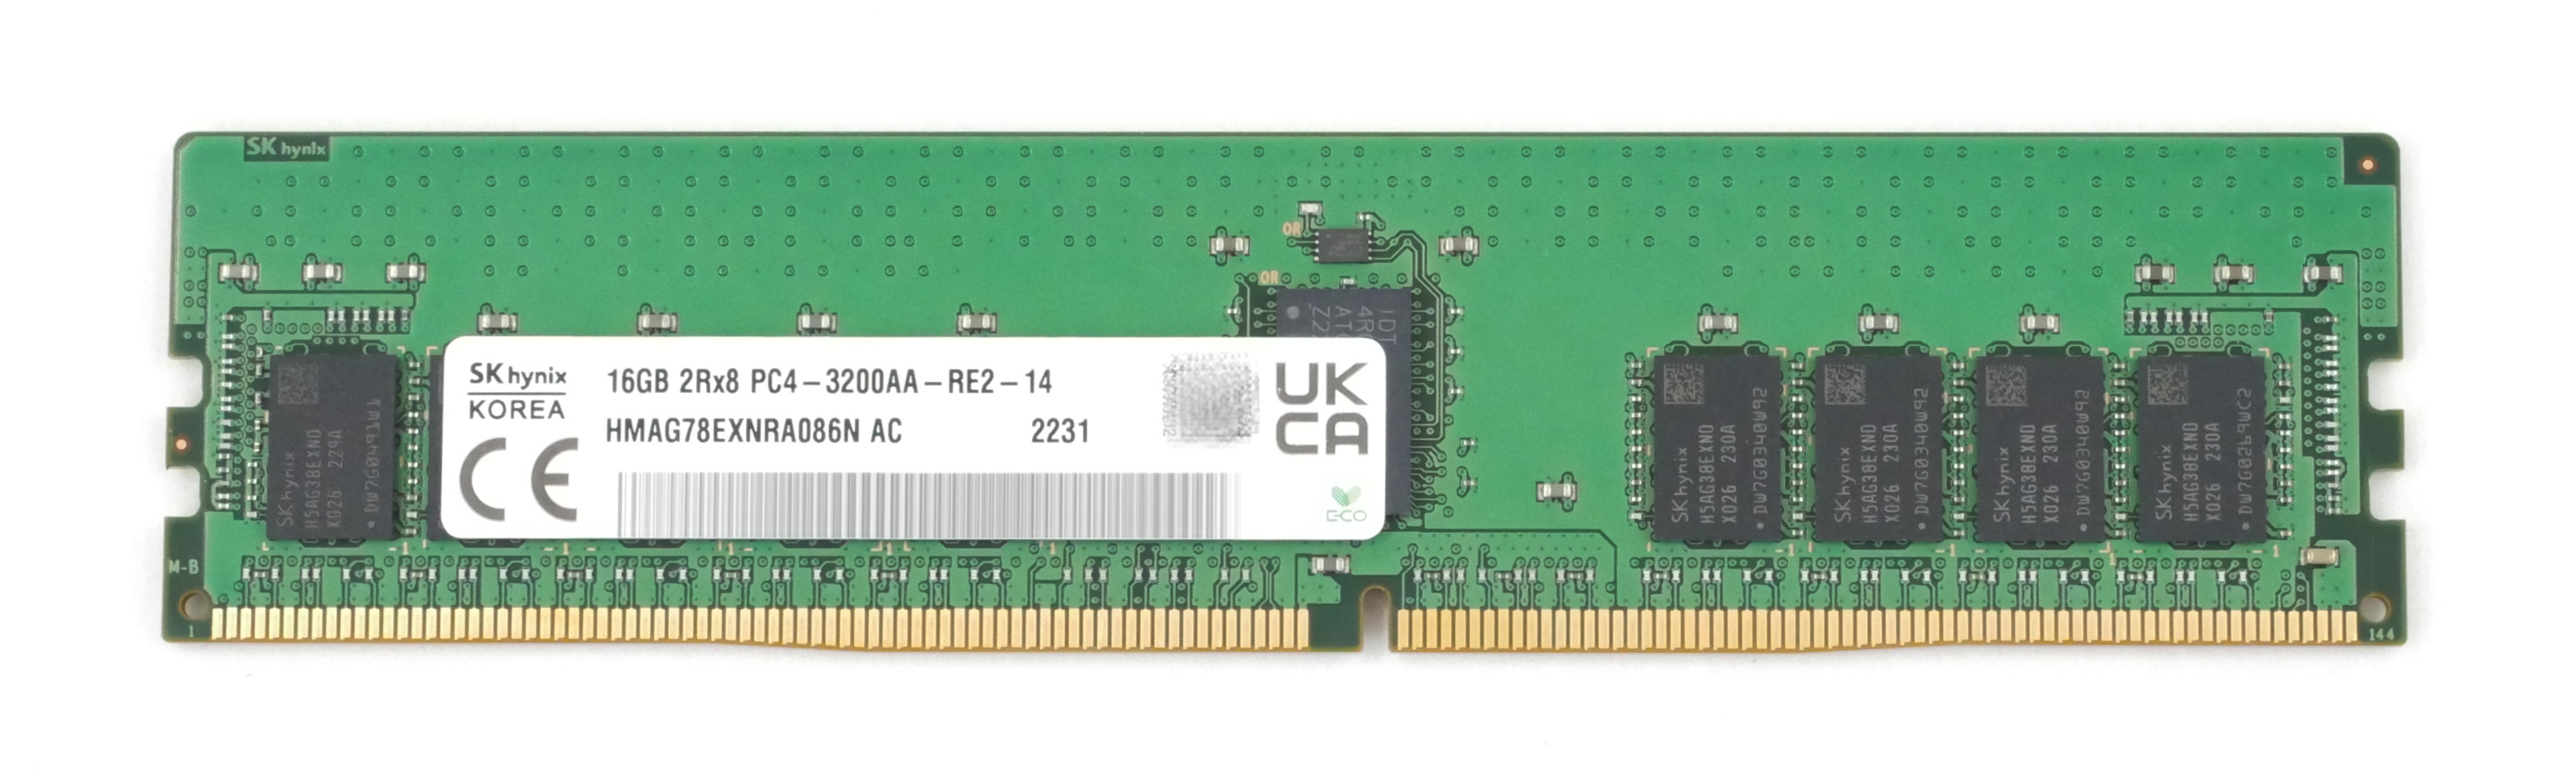 Hynix 16GB HMAG78EXNRA086N AC 231 PC4-3200AA DDR4 288pin ECC Reg 1.2V